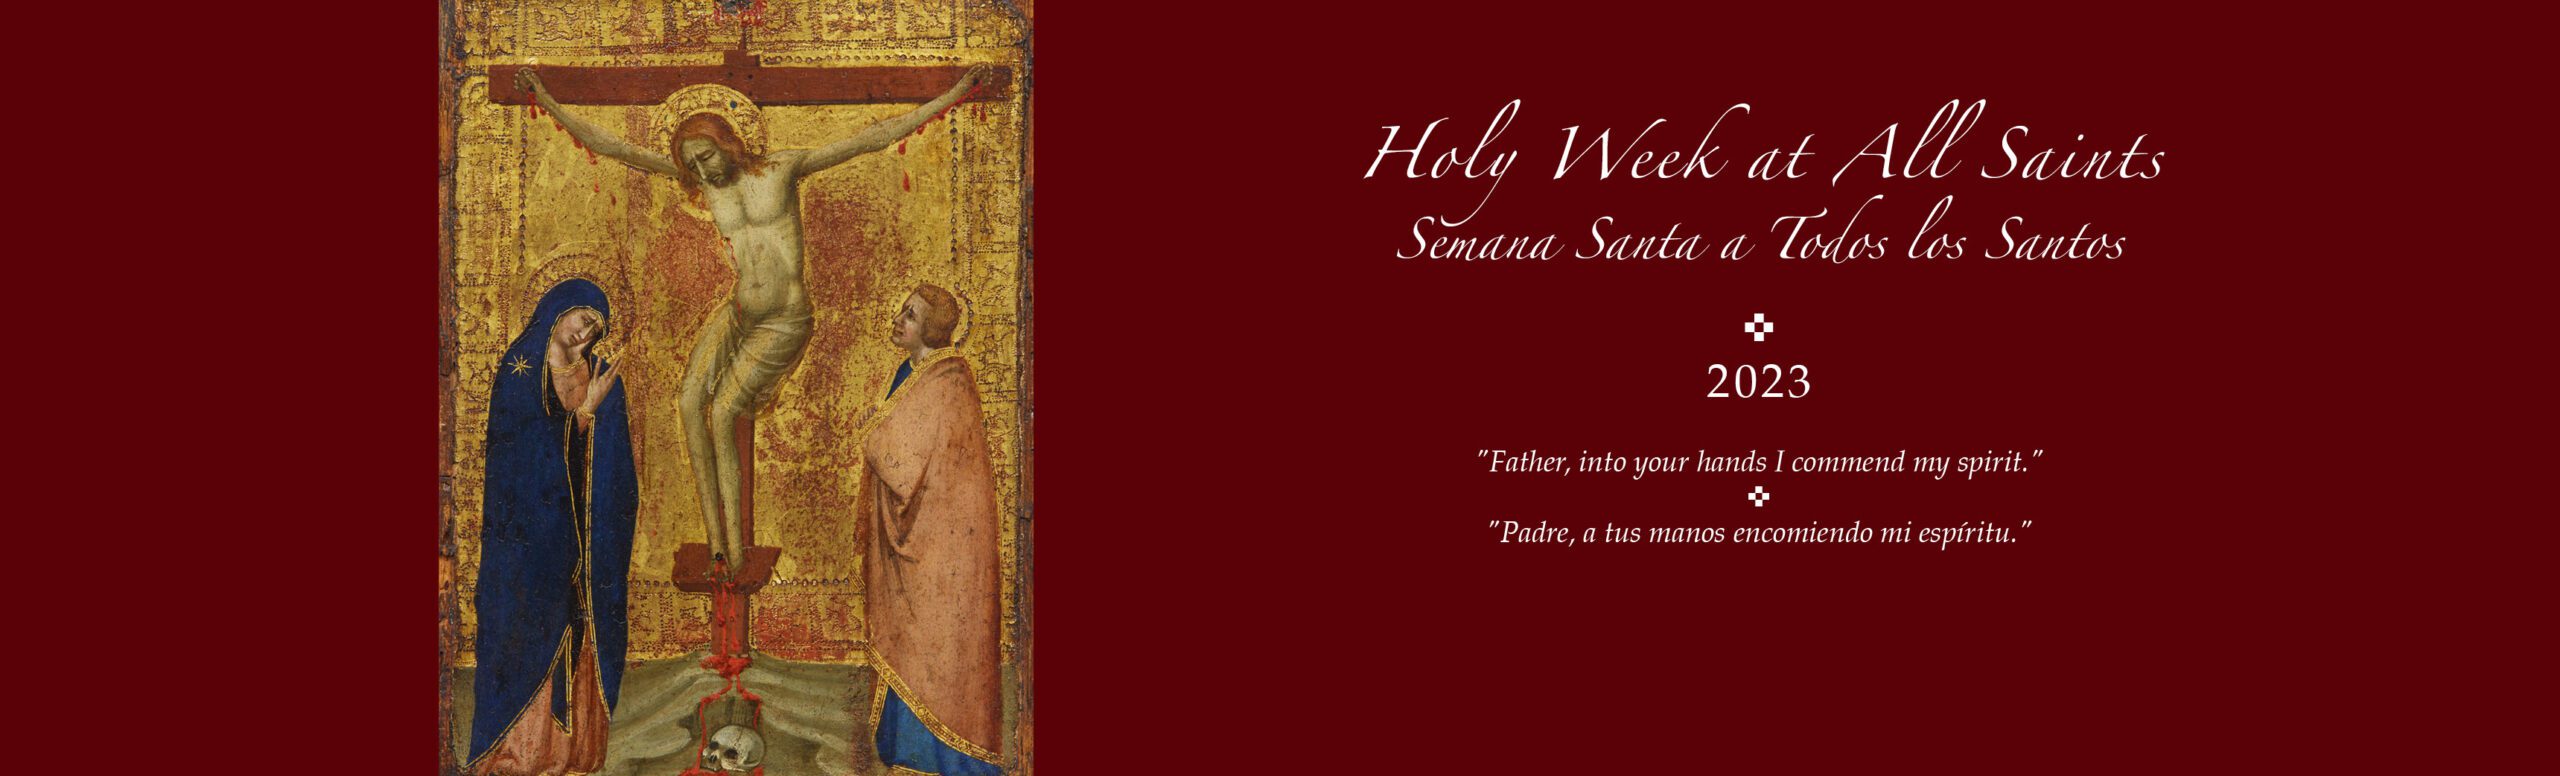 All Saints HolyWeek Web Banner 2023 Scaled 